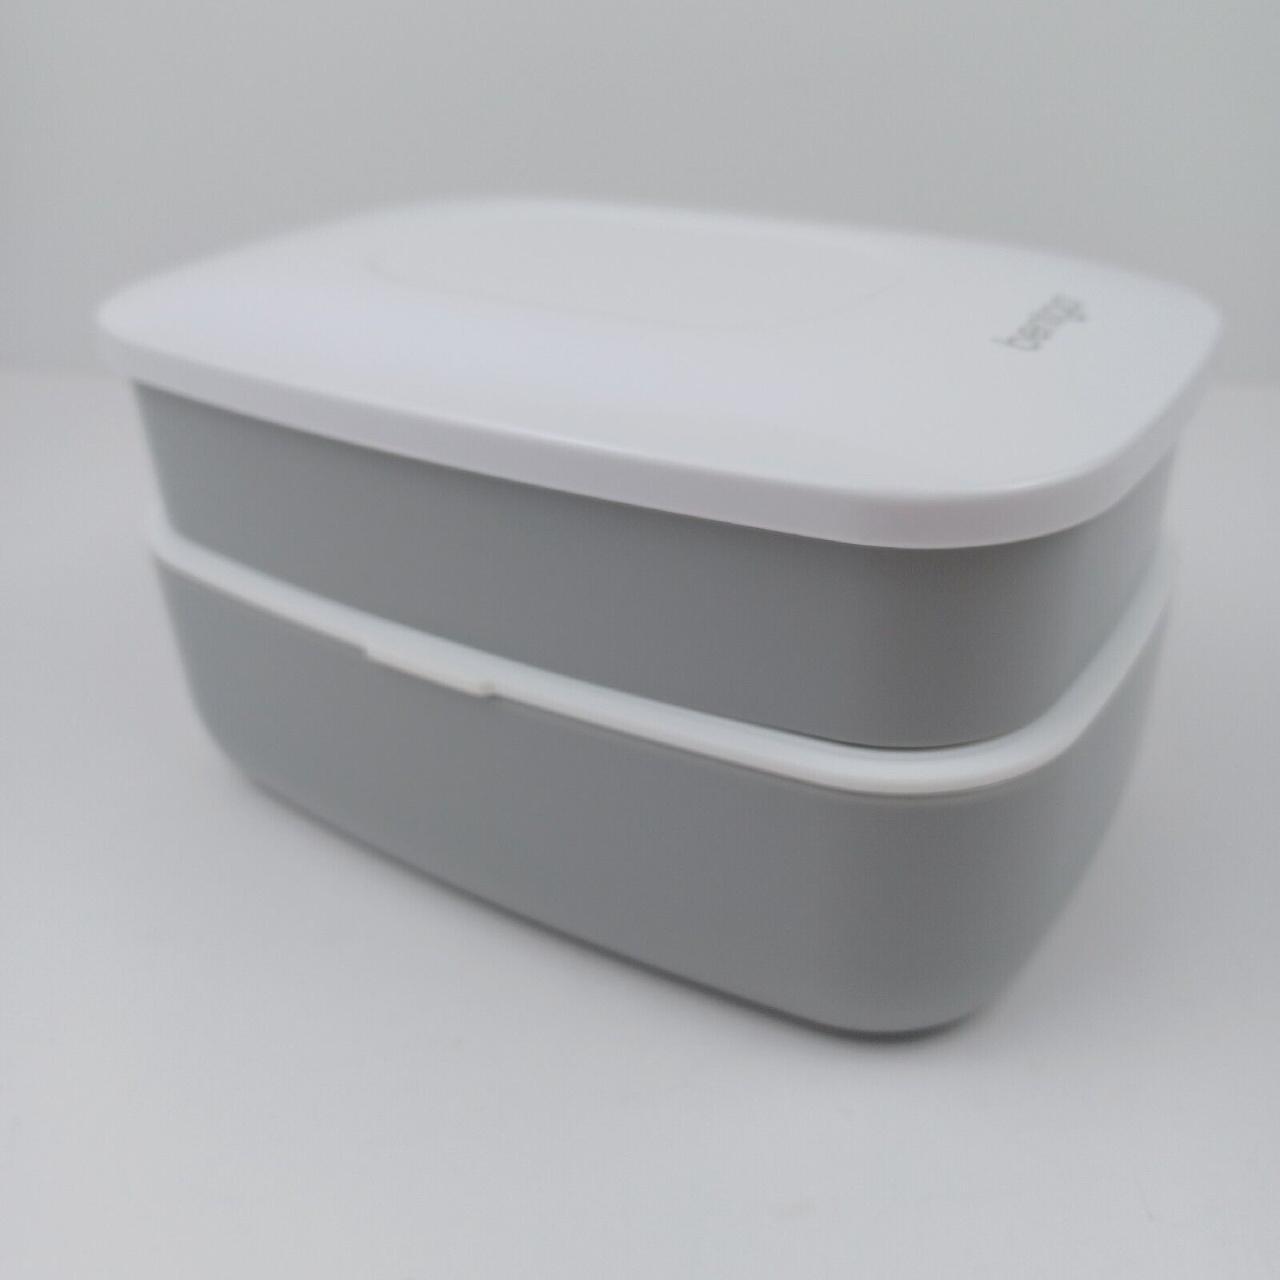 NWT Bentgo Bowl. Bento box lunch container. - Depop